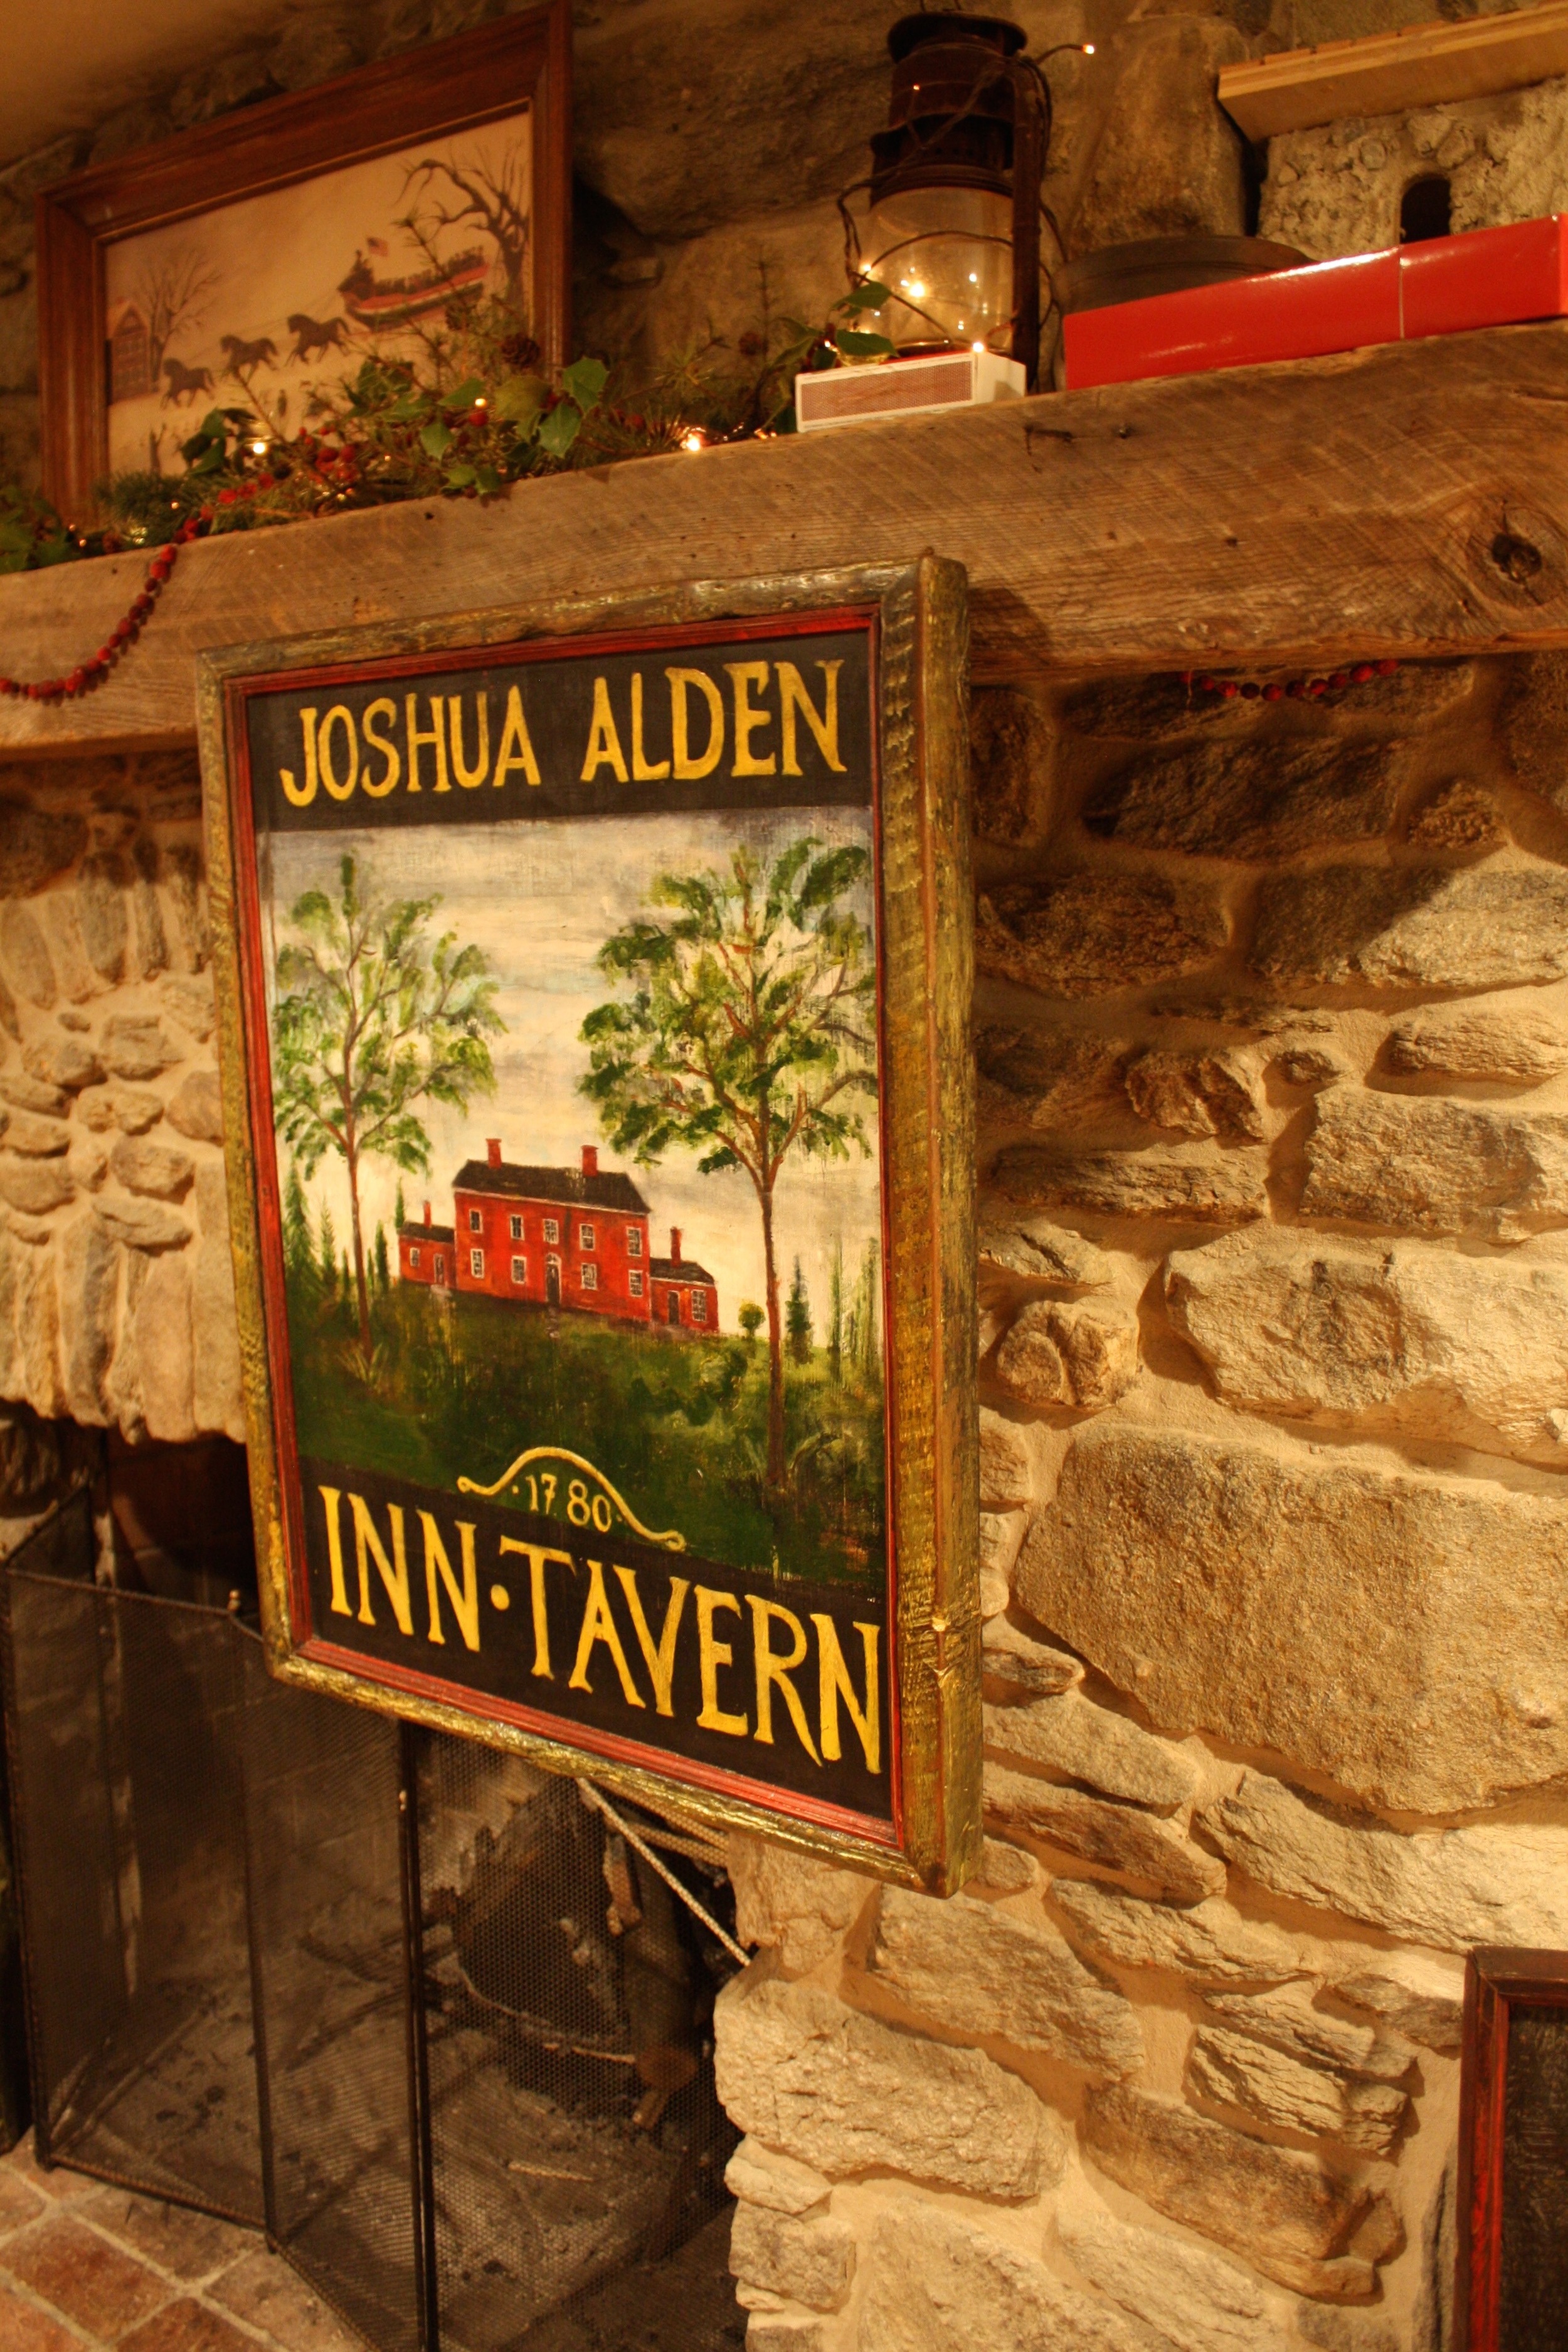 Joshua Alden, Inn Tavern